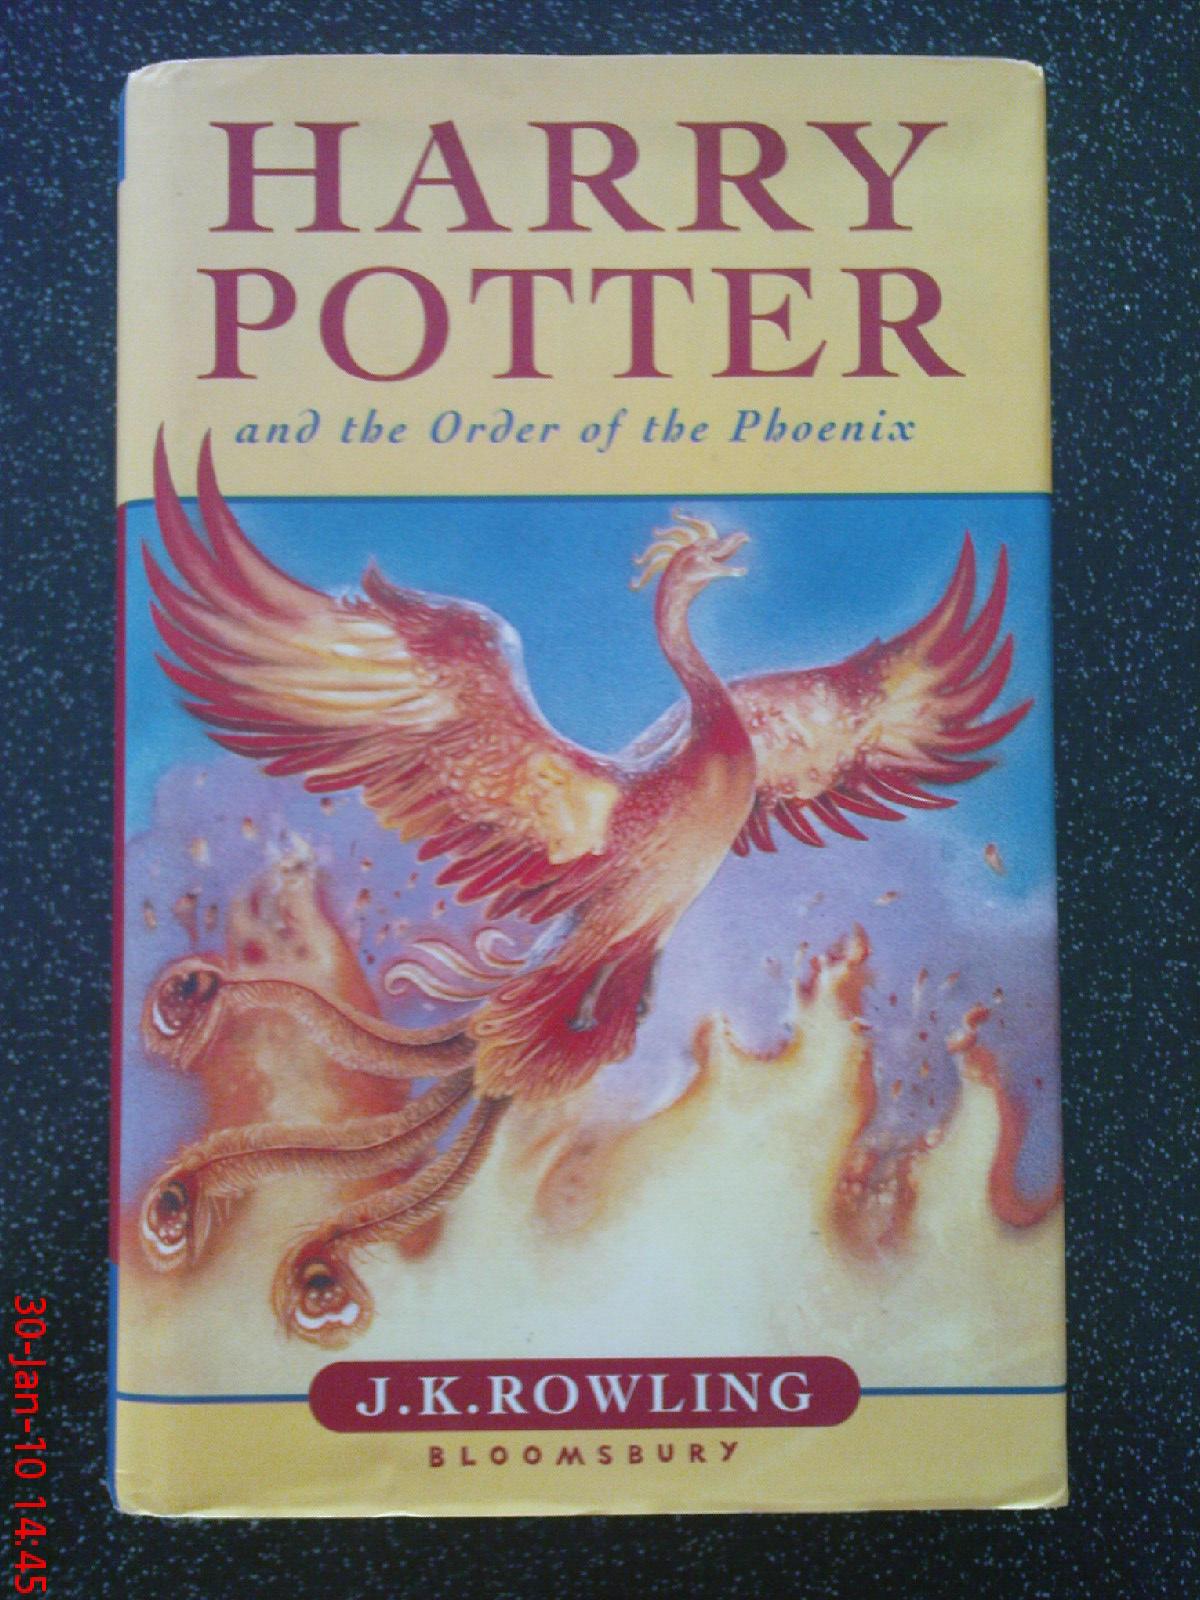 The Complete Harry Potter Collection (комплект из 7 книг) .